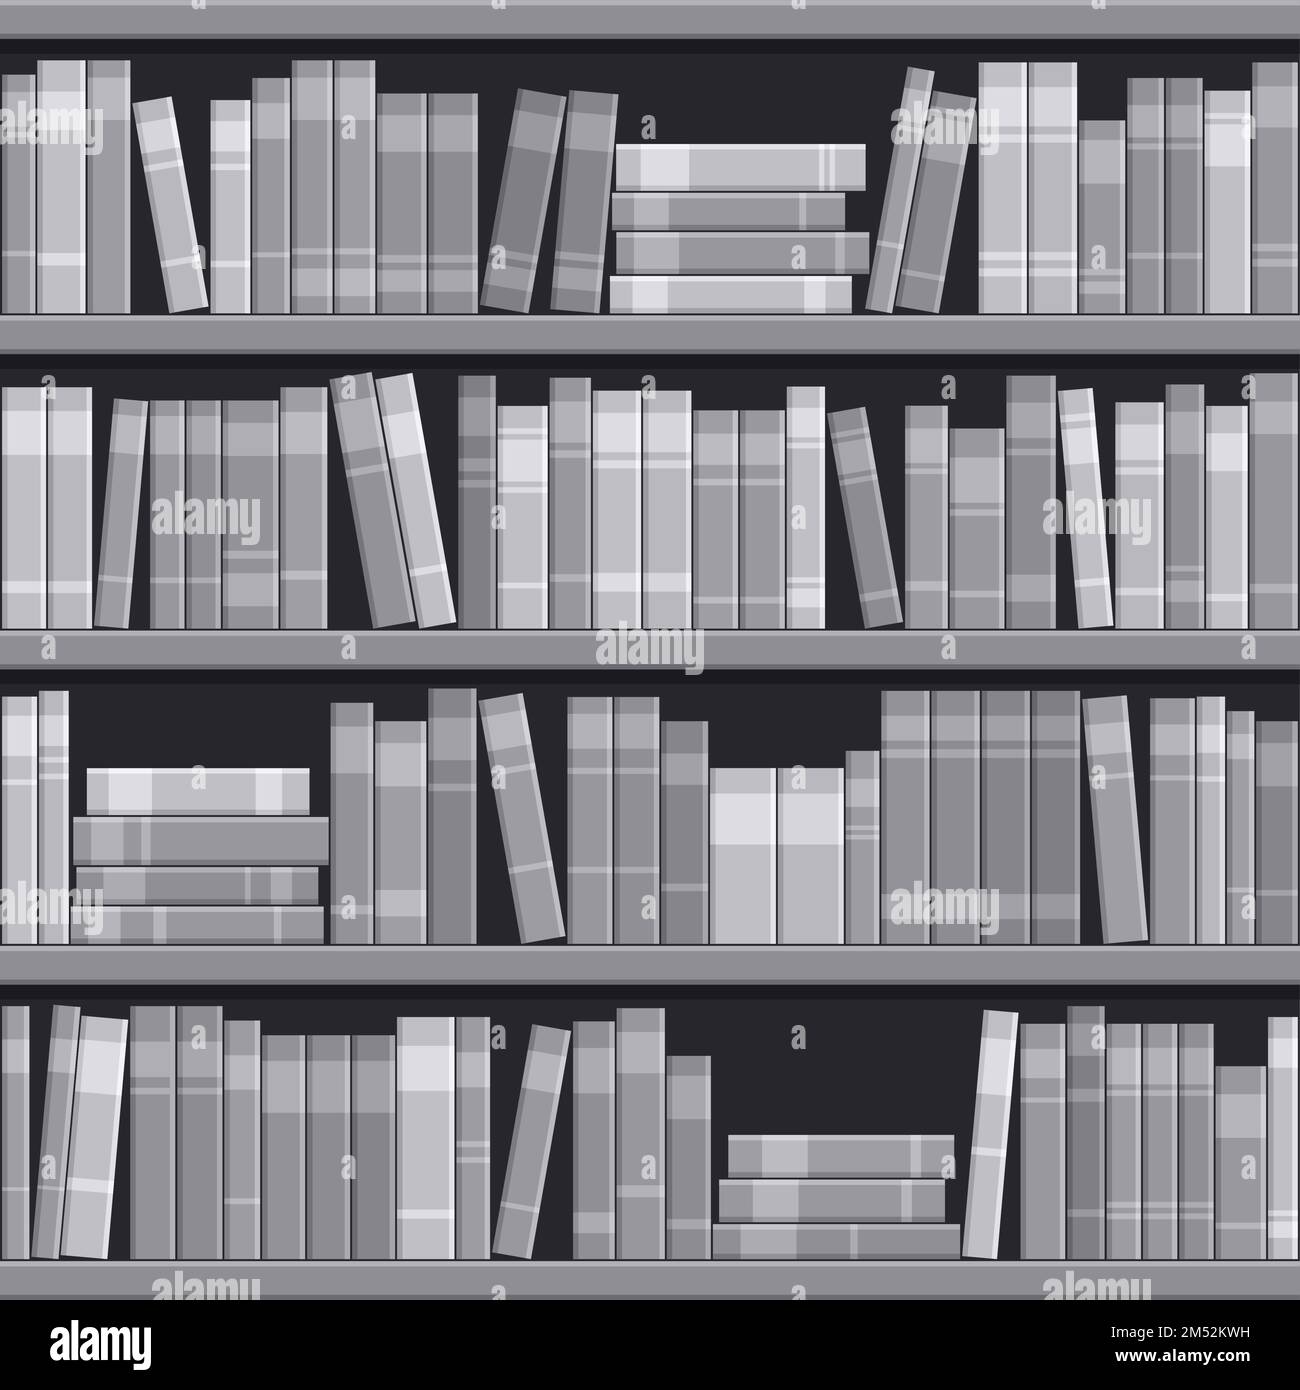 Vier Bücherregale. Variante Bücherregale in Grautönen. Stock Vektor